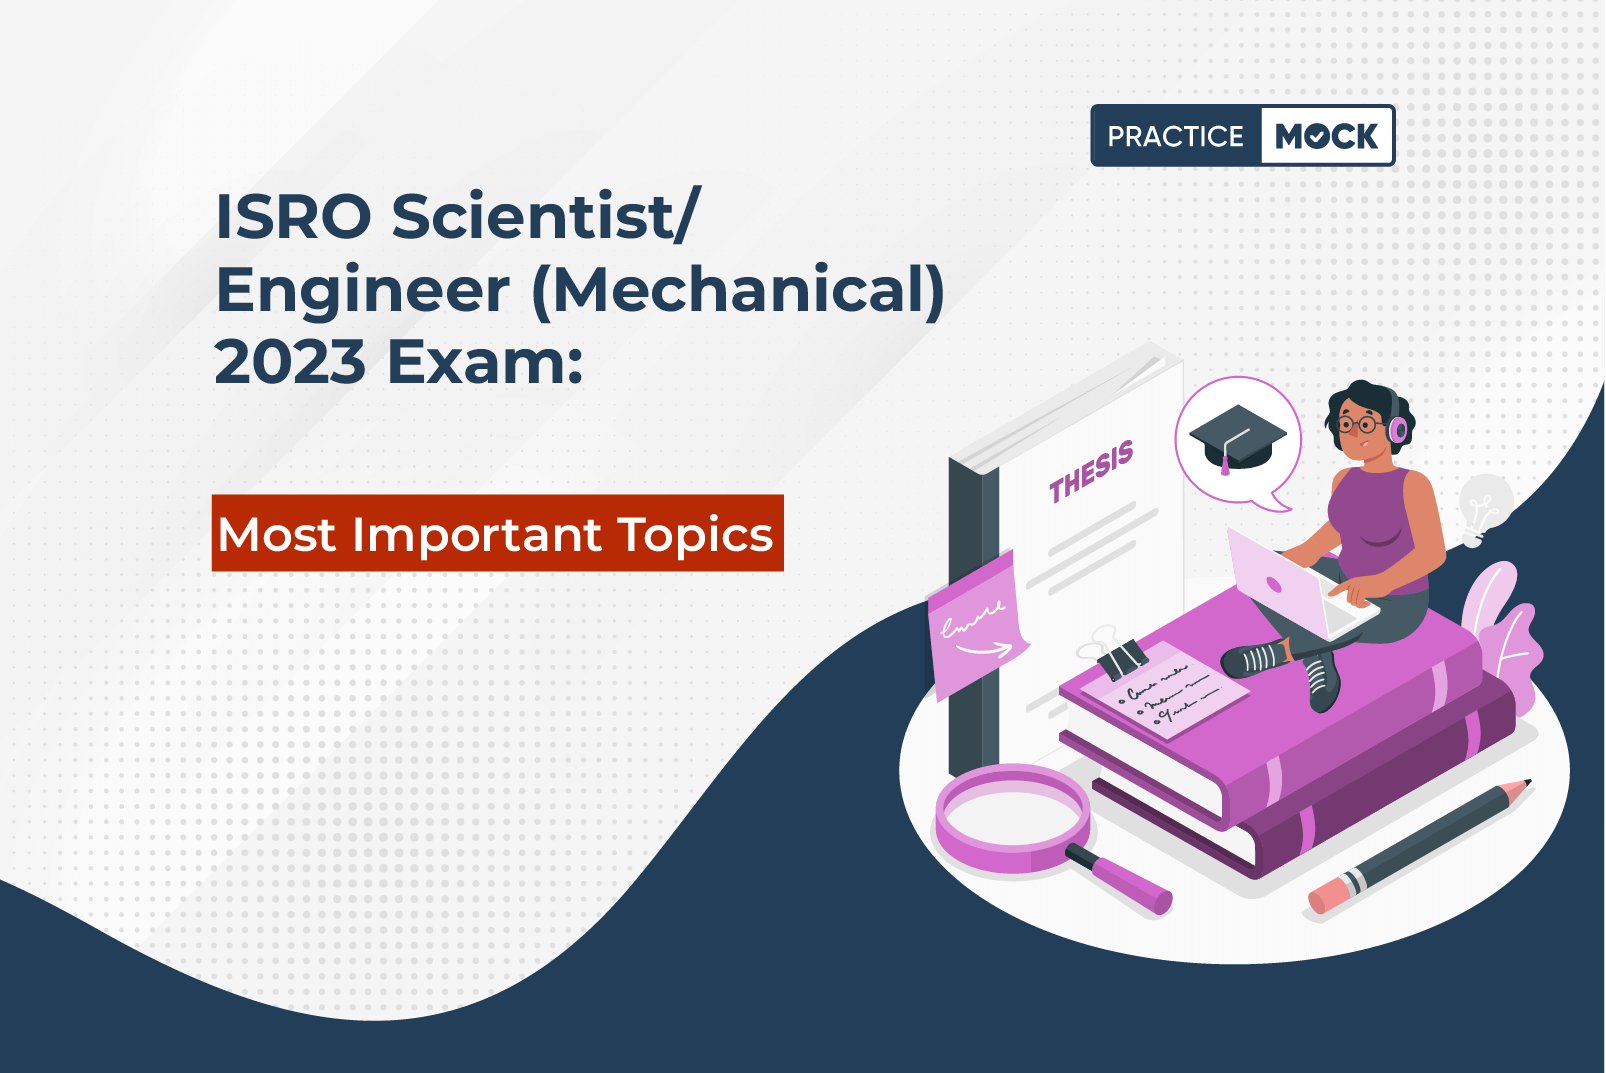 ISRO Scientist/Engineer (Mechanical) 2023 Exam: Most Important Topics